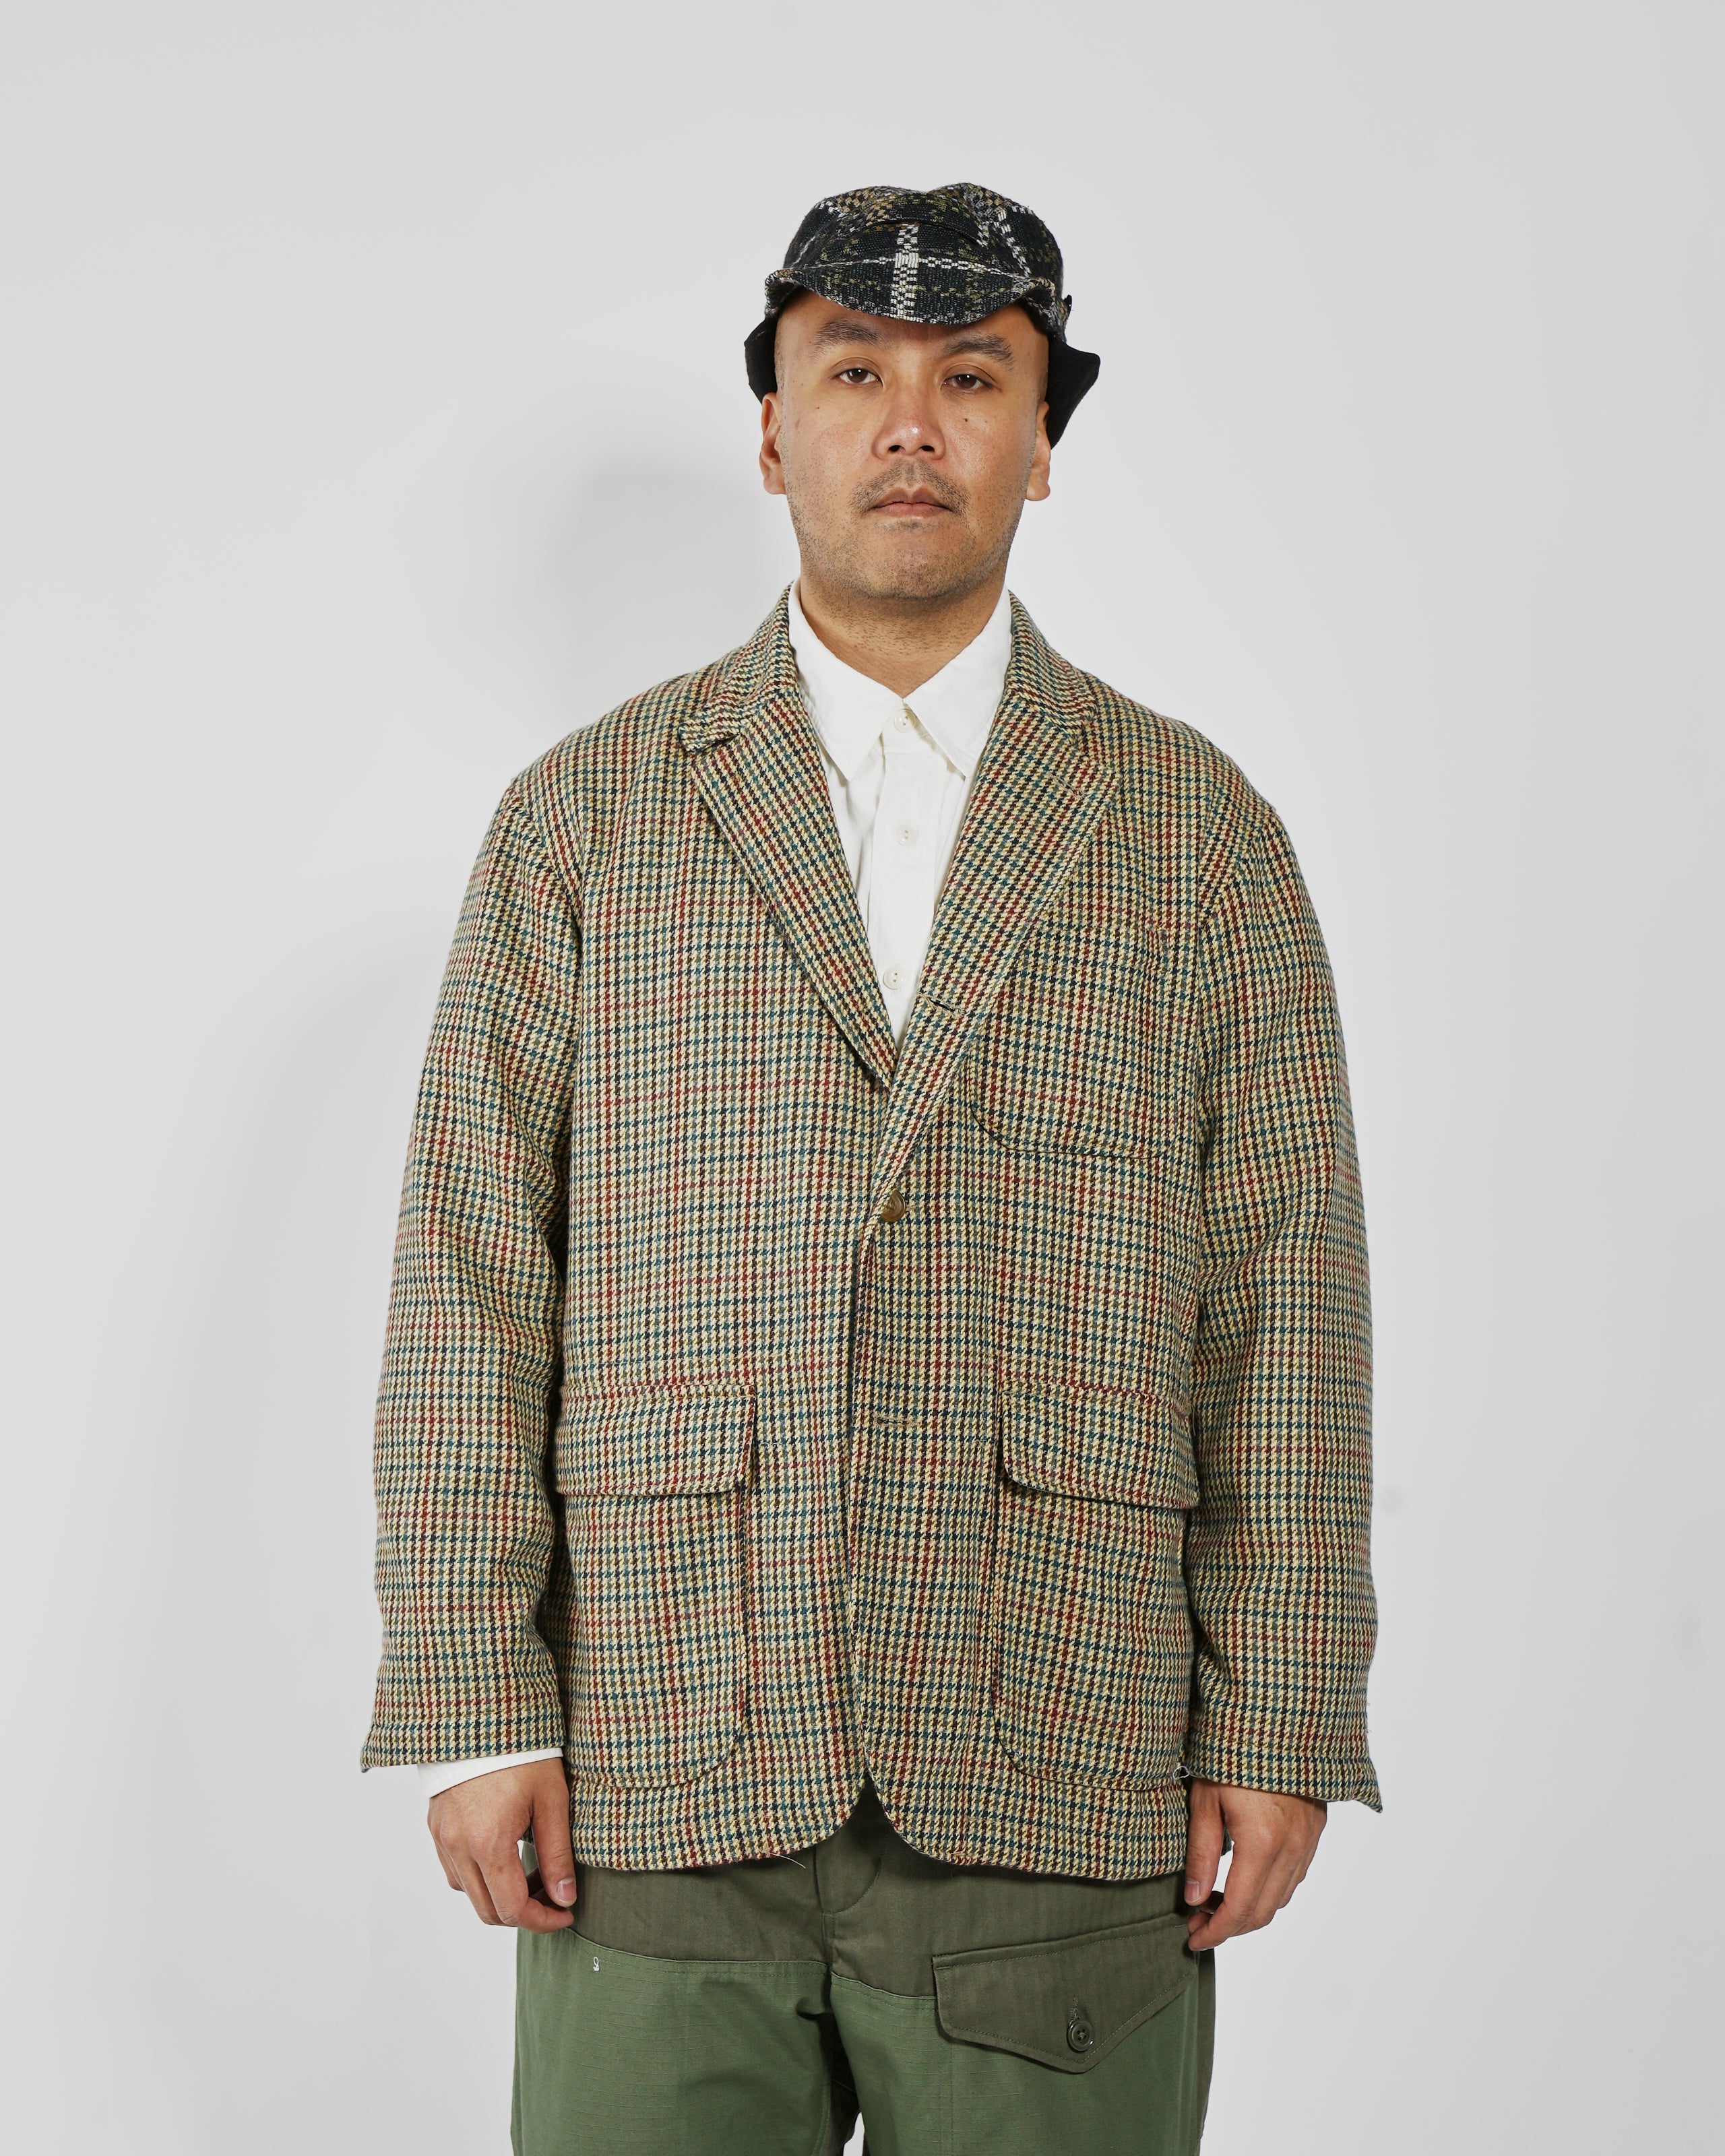 Andover Jacket - Khaki Acrylic Wool Gunclub Check